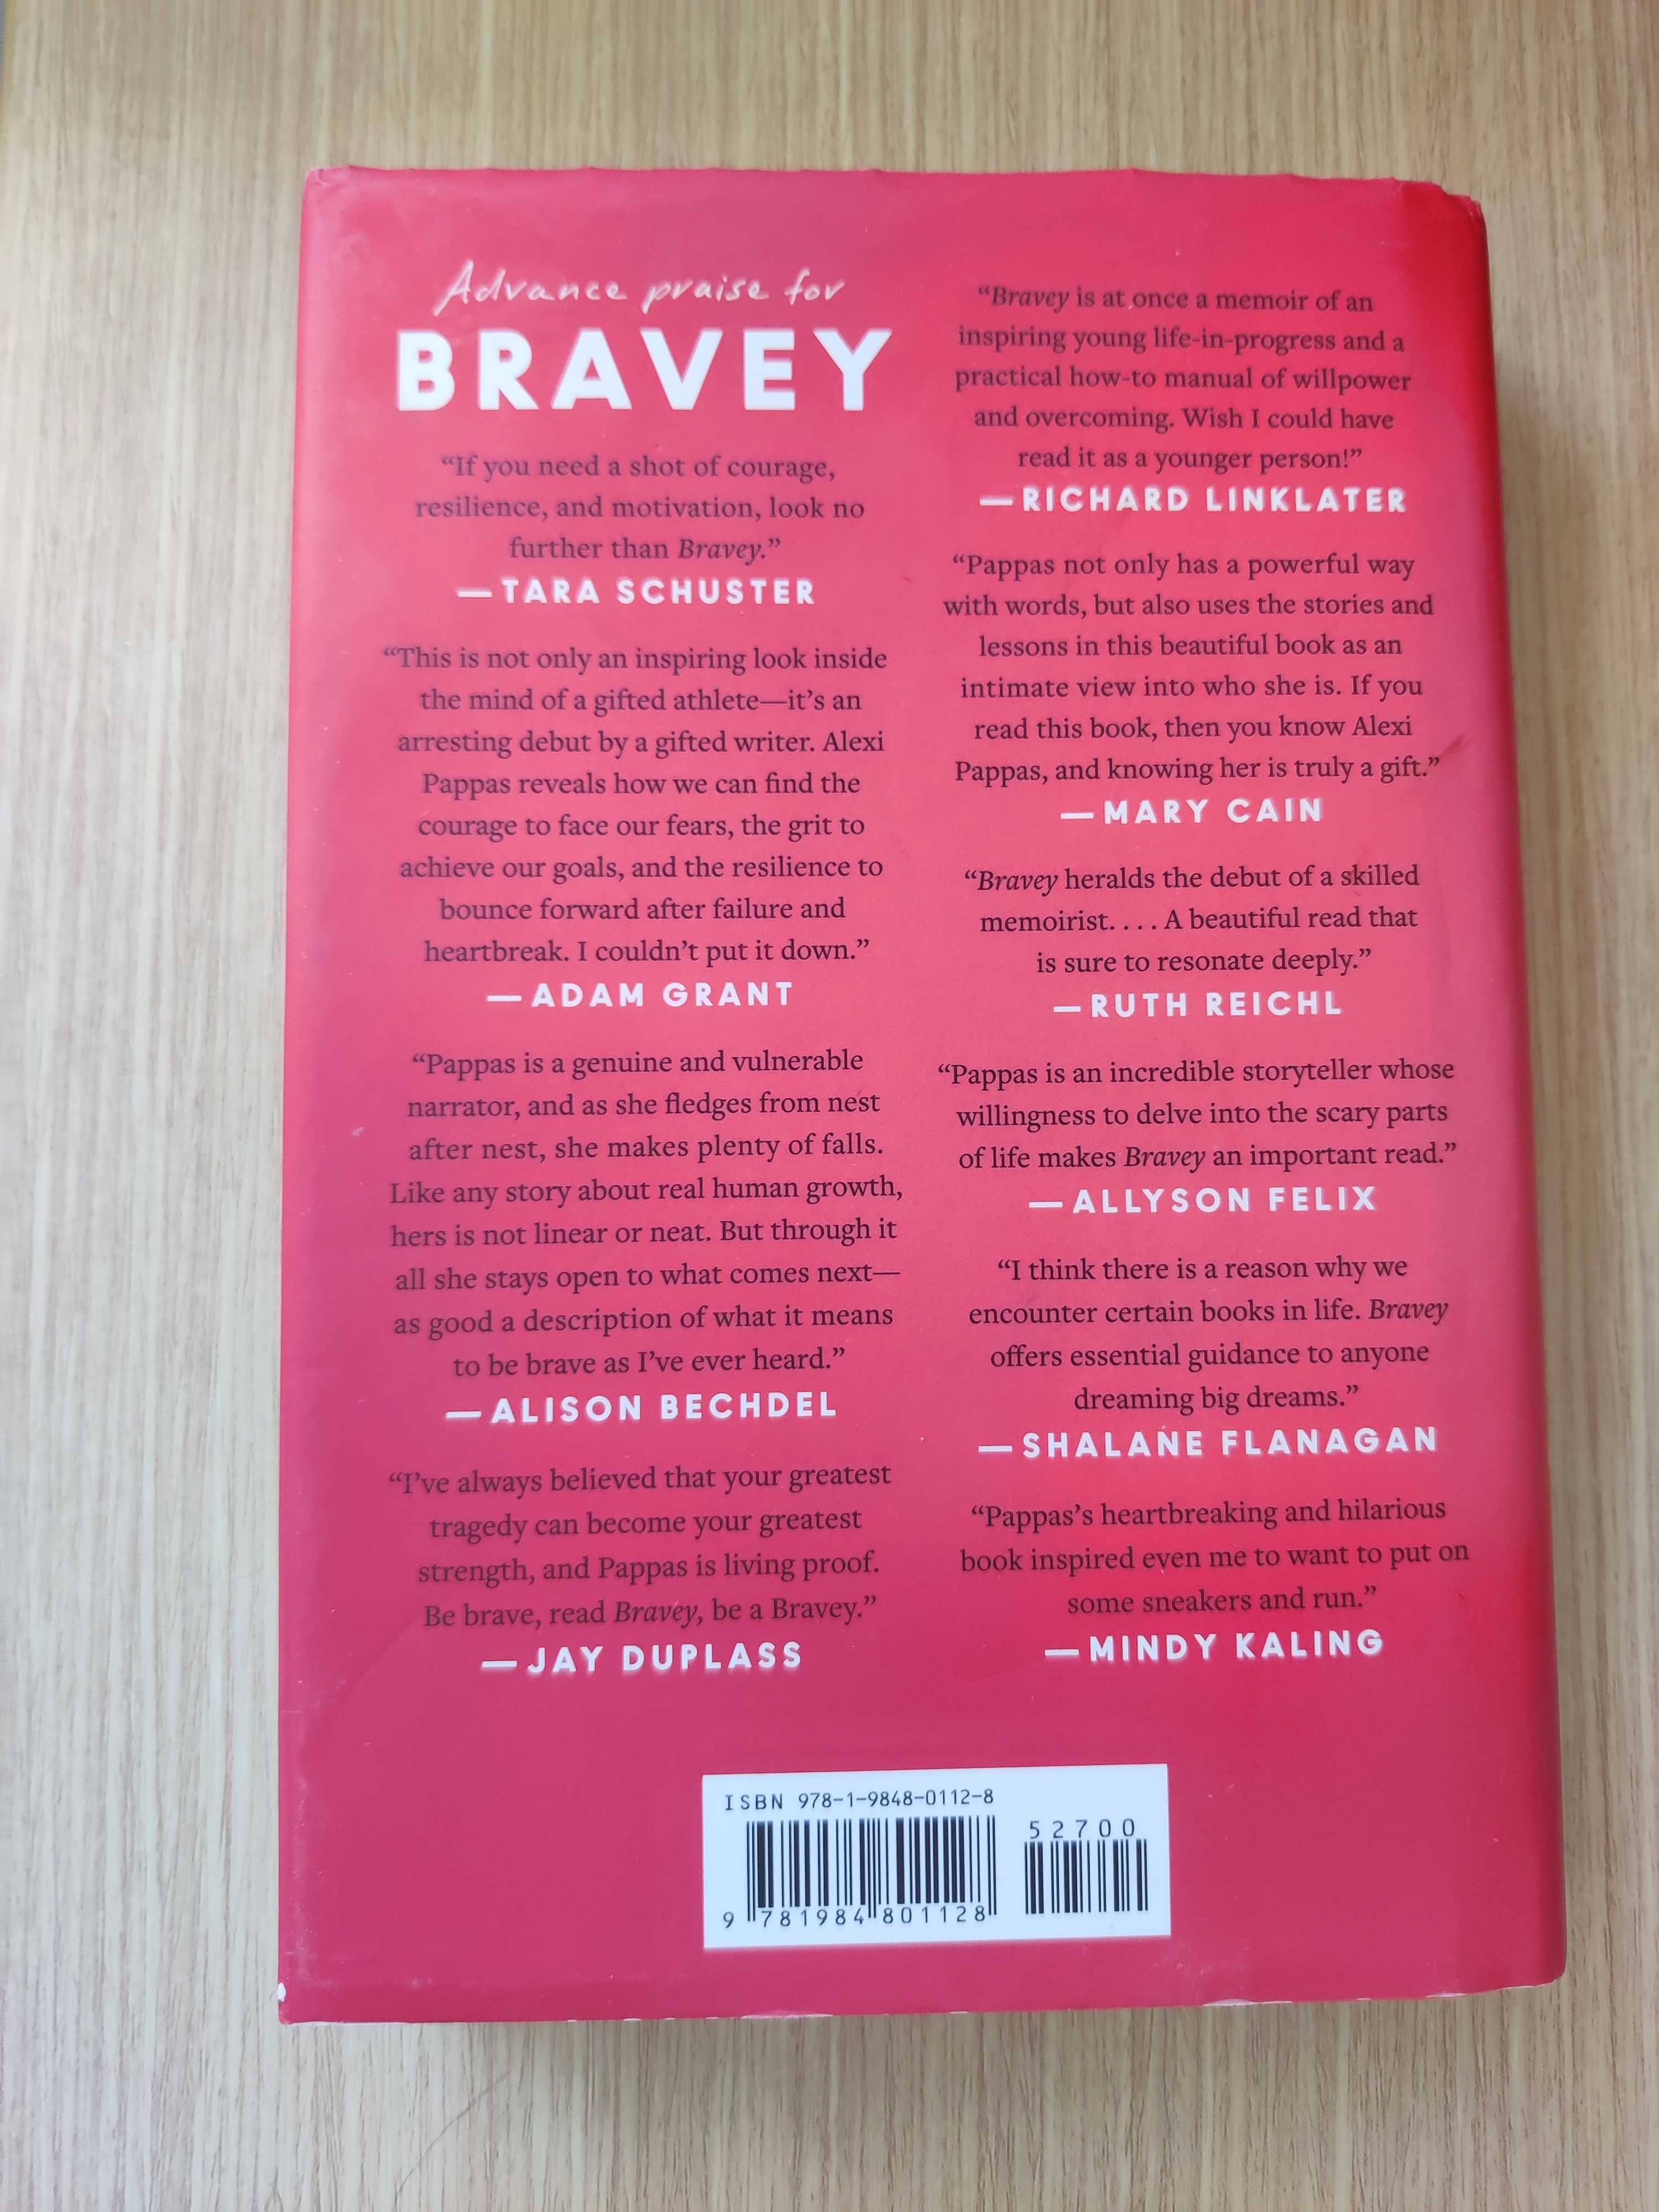 Livro "Bravey" de Alexi Pappas